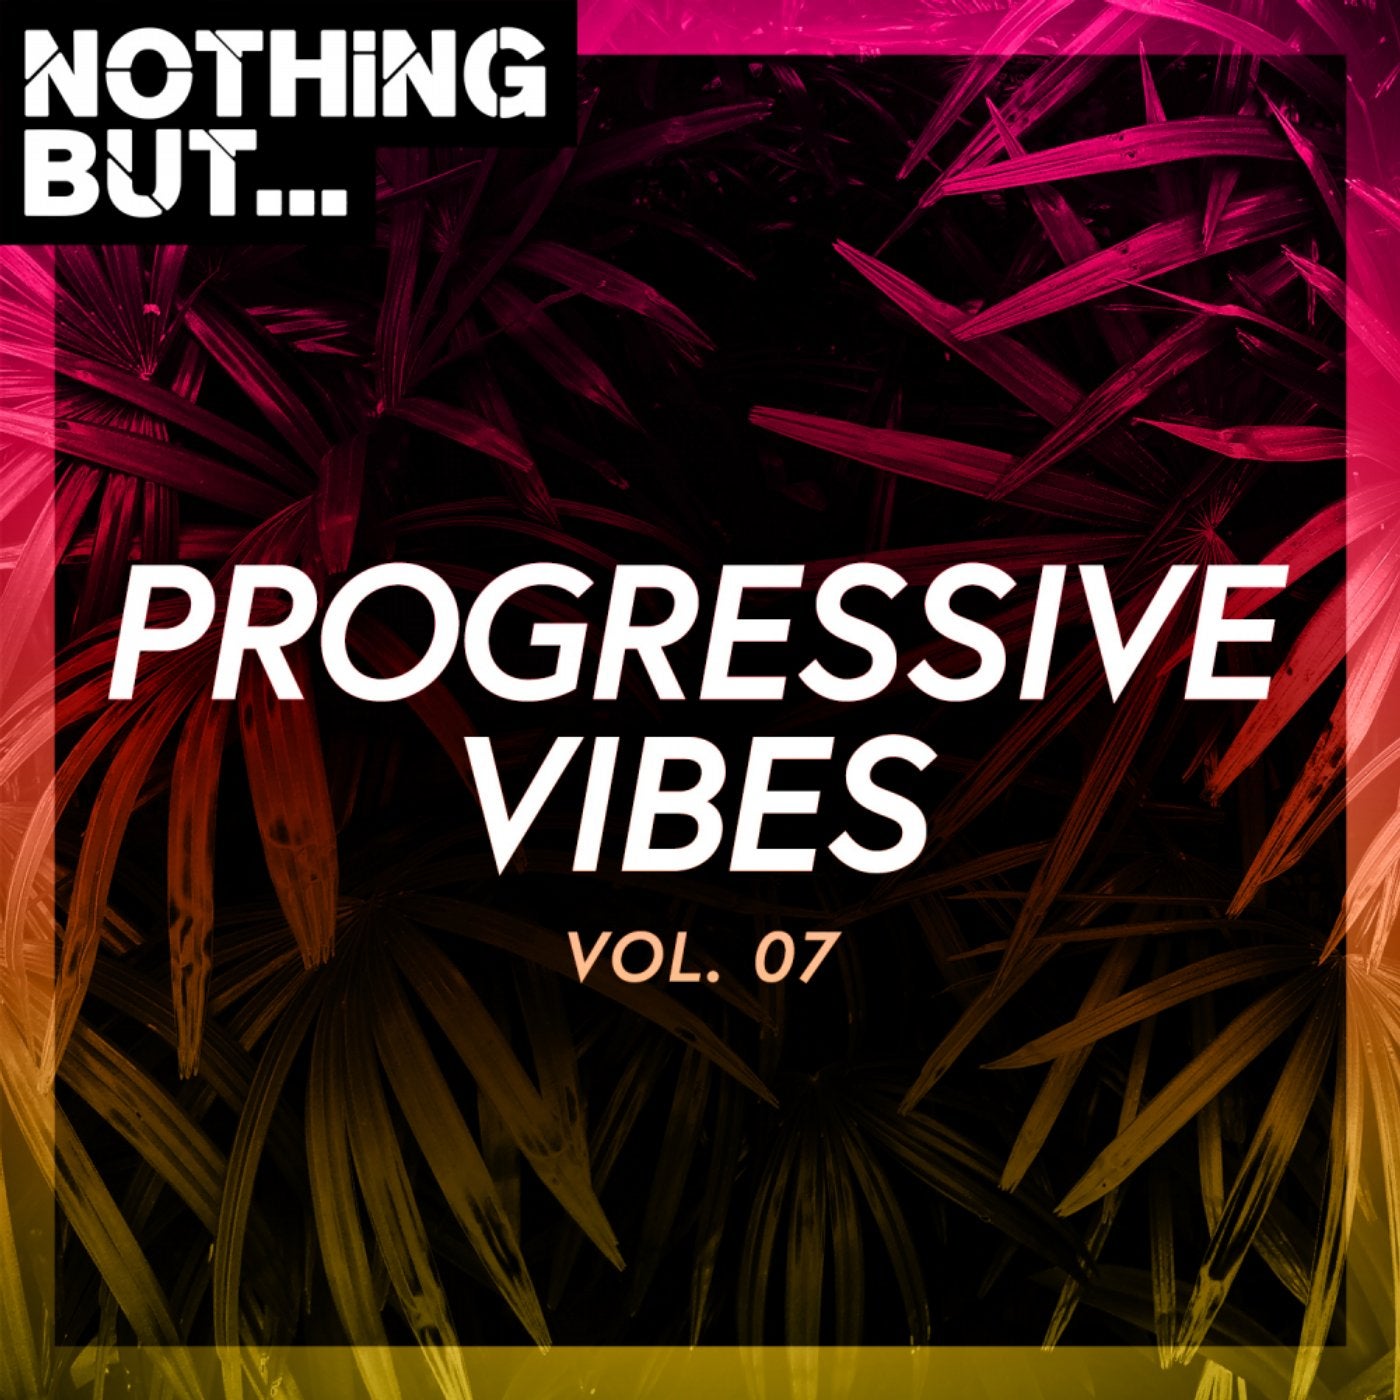 Nothing But... Progressive Vibes, Vol. 07